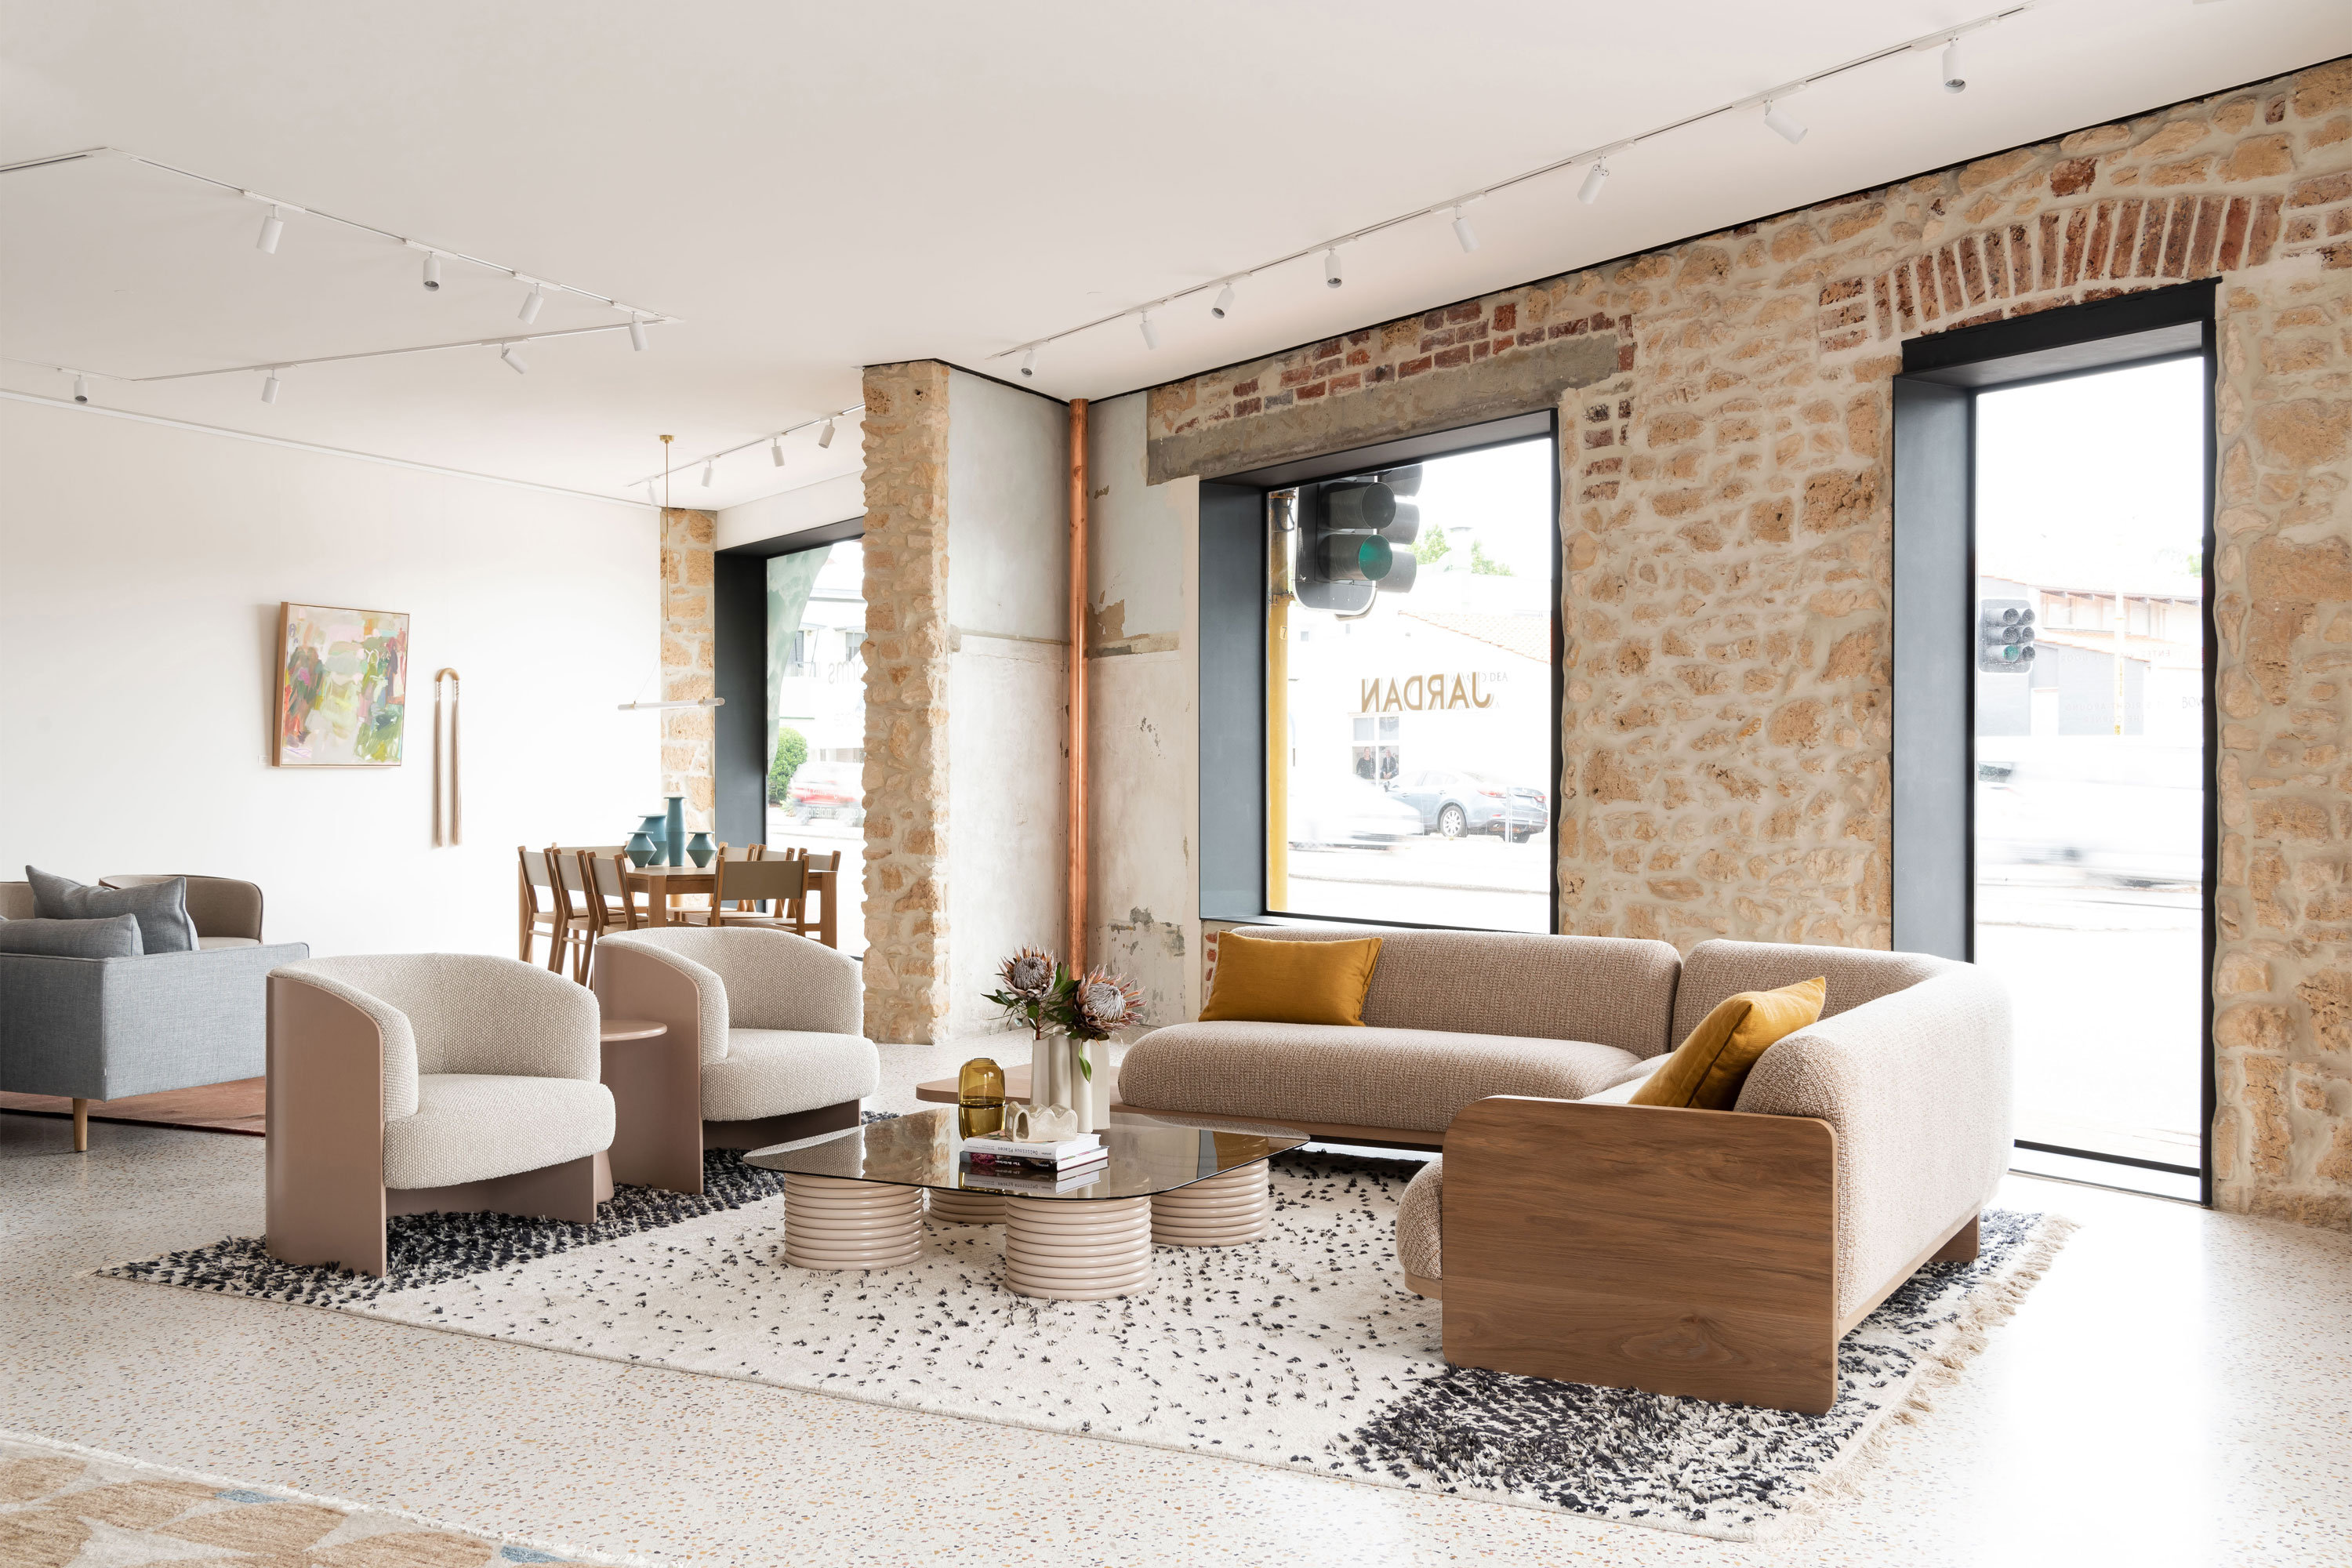 Furniture & Homewares Store Perth | Peppermint Grove | Jardan